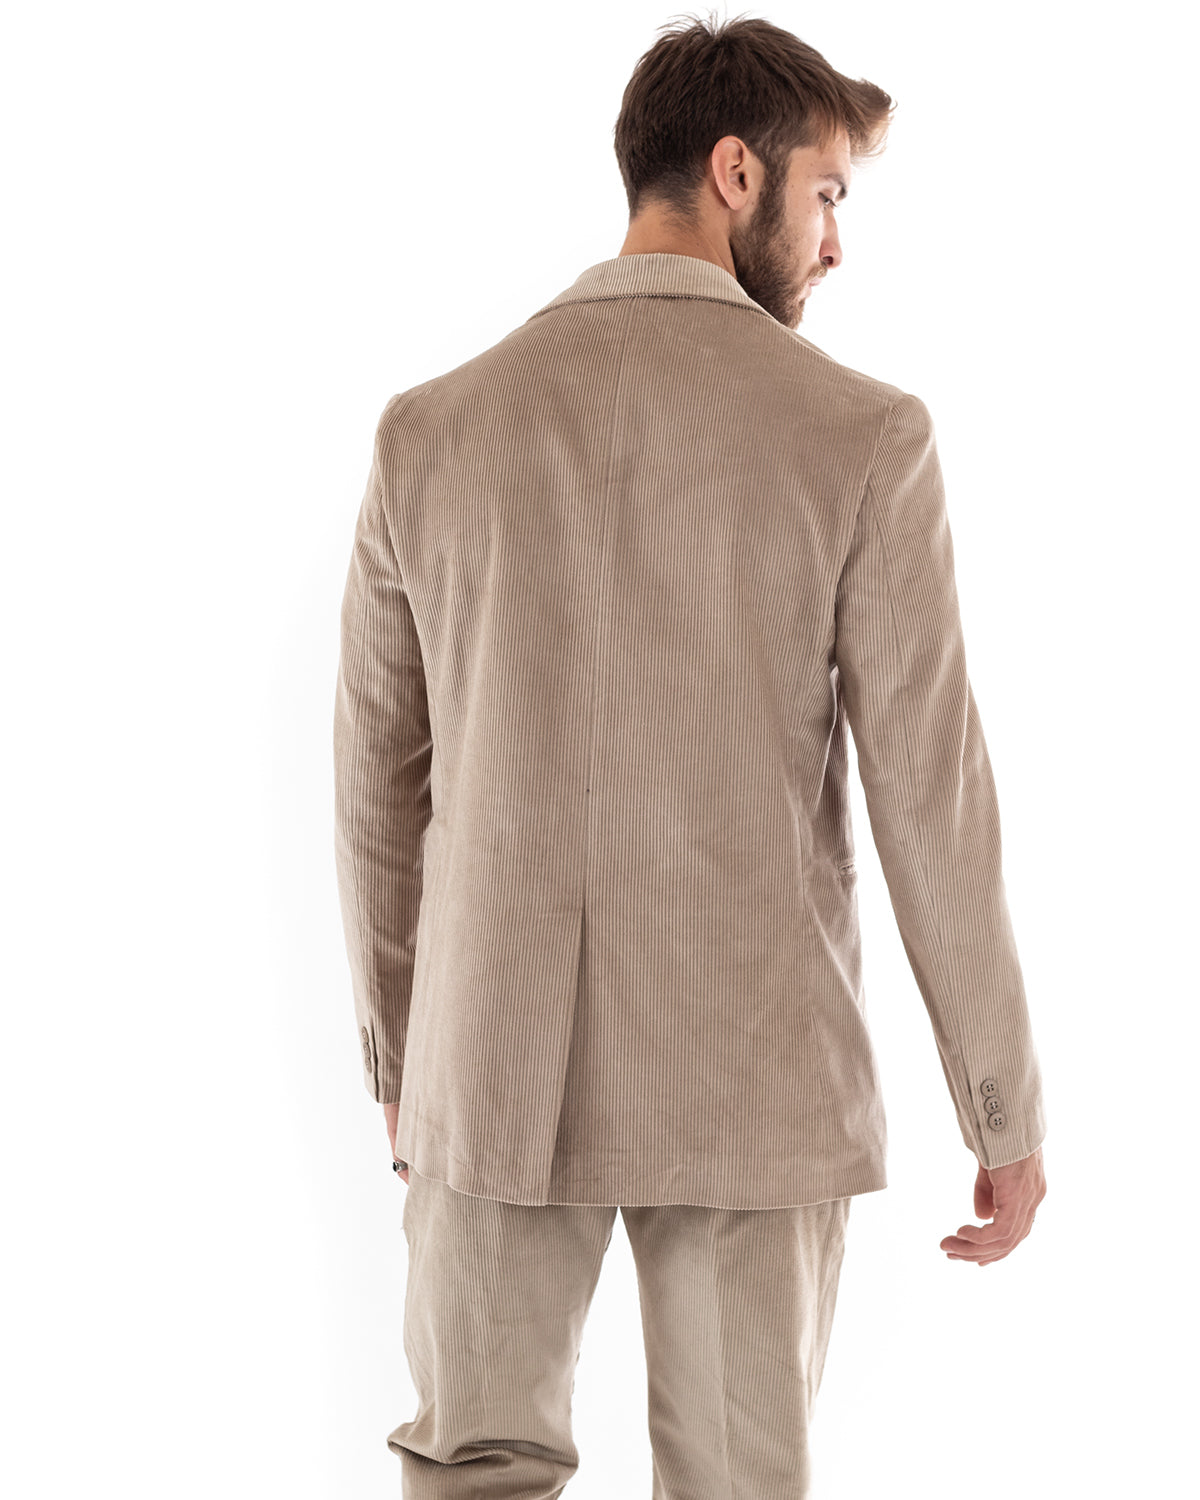 Double-Breasted Men's Suit Velvet Suit Jacket Trousers Beige Elegant Ceremony GIOSAL-OU2191A